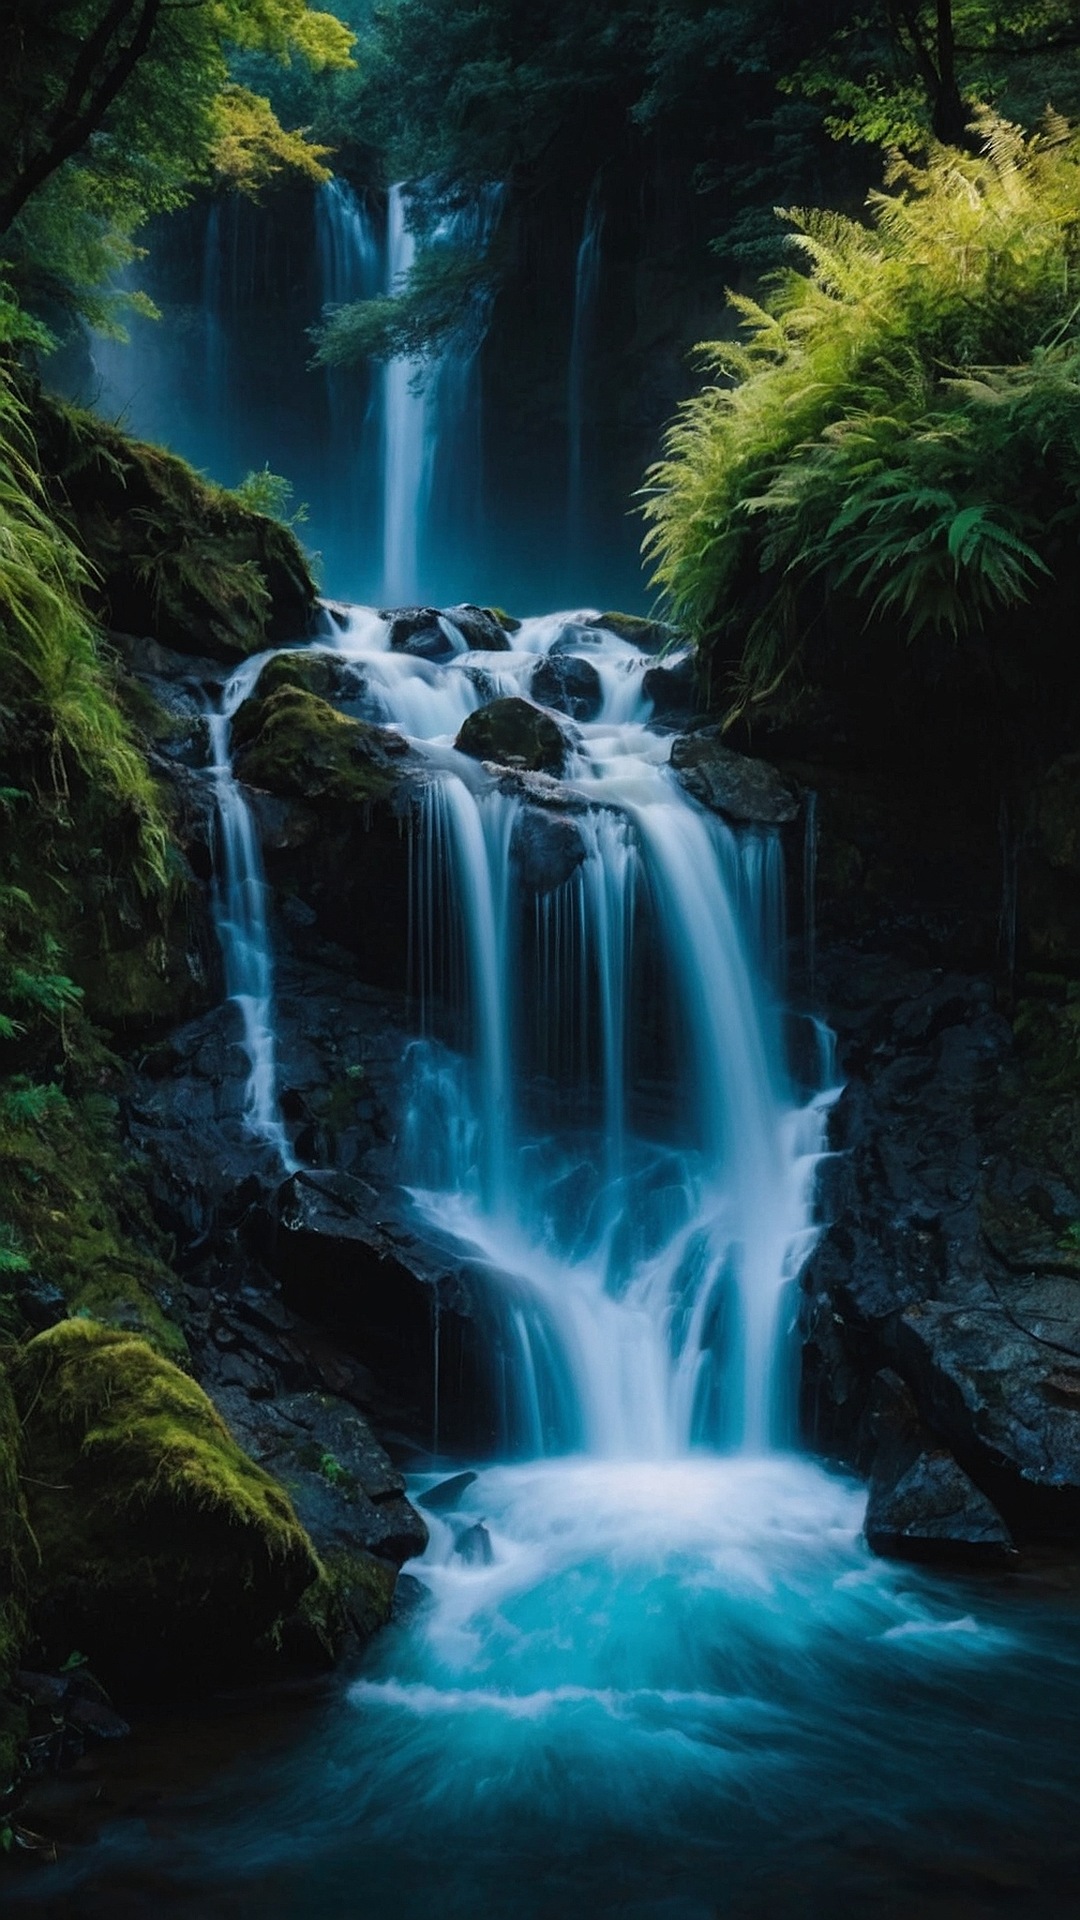 Serene Waters: Captivating Waterfall Wallpaper Designs